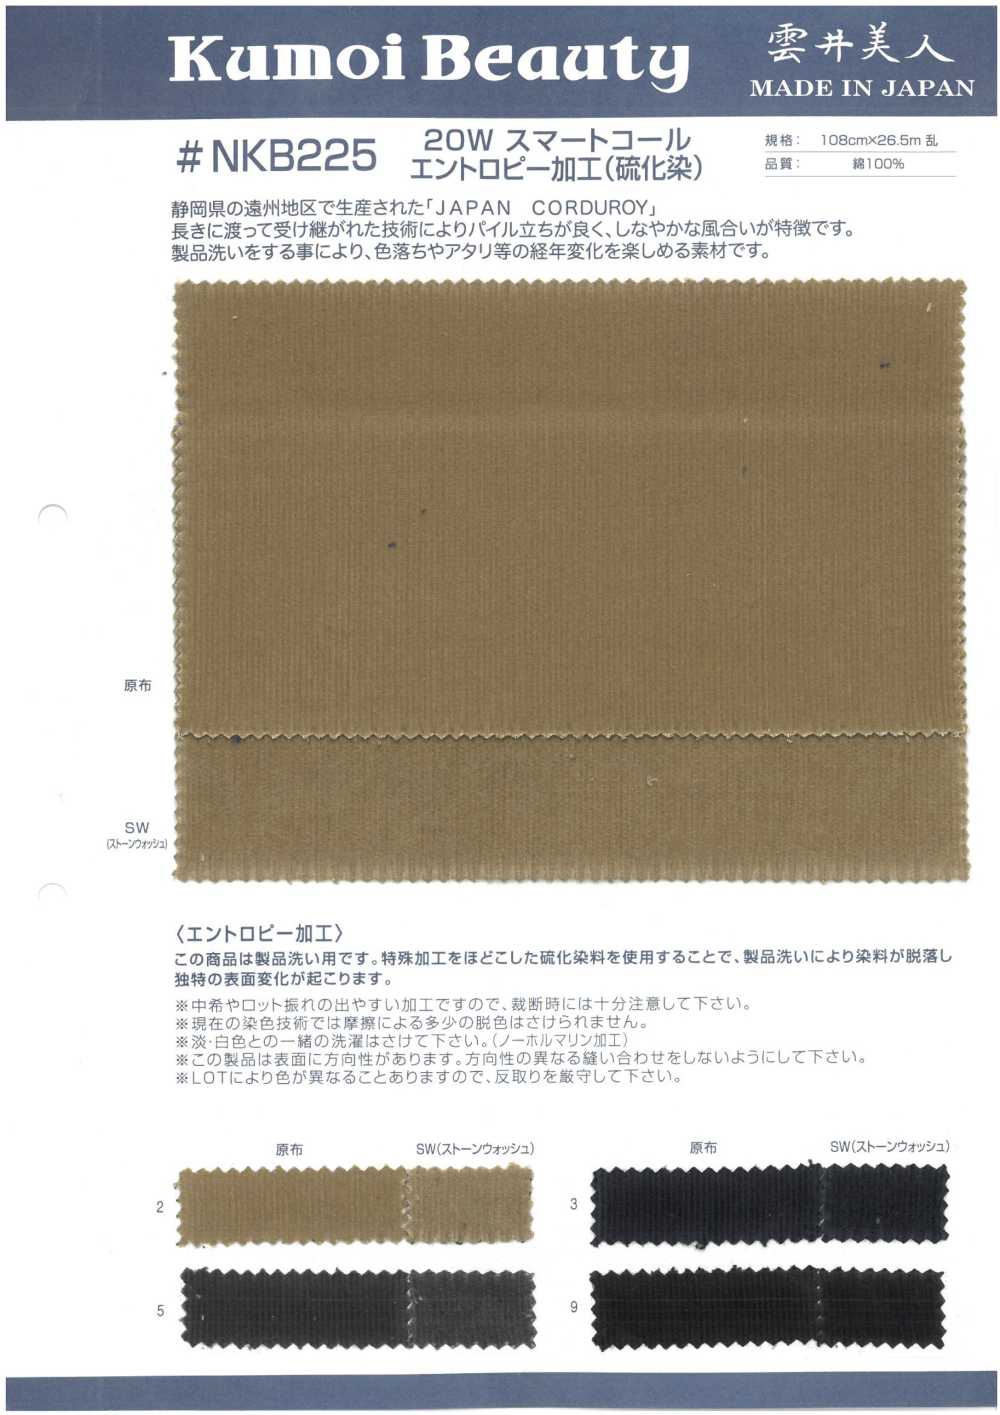 NKB225 20W Smart Corduroy Entropy Processing (Sulfide Dyeing)[Textile / Fabric] Kumoi Beauty (Chubu Velveteen Corduroy)